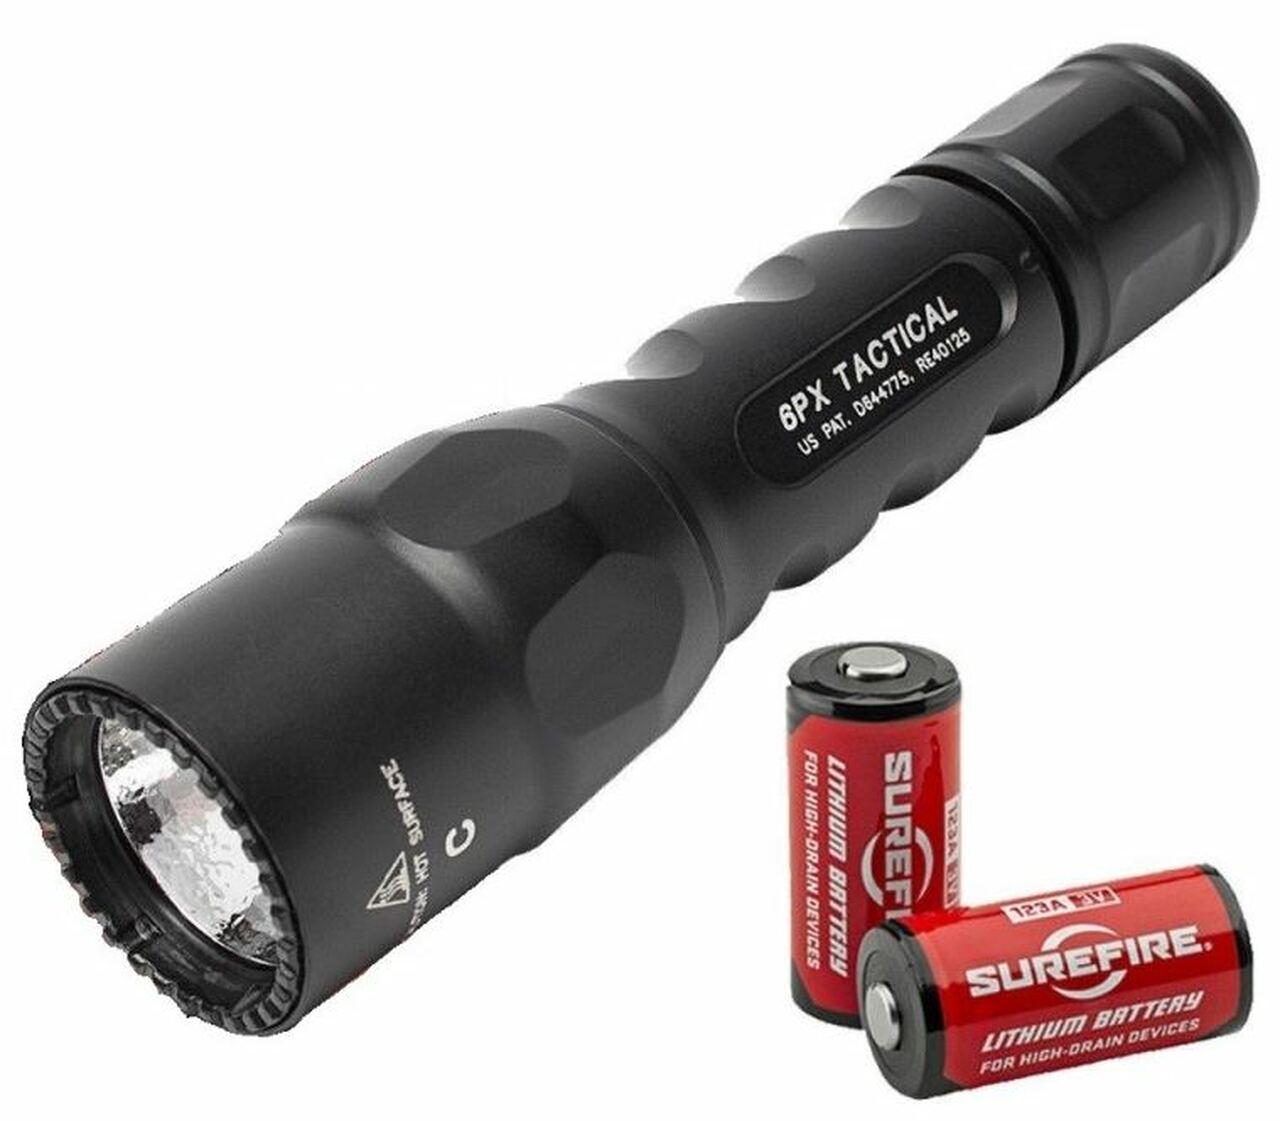 SureFire 6PX Pro Tactical Dual-Output 600 Lumen LED Flashlight - 6PX-D-BK - $70.99 + Free Shipping (Free S/H)